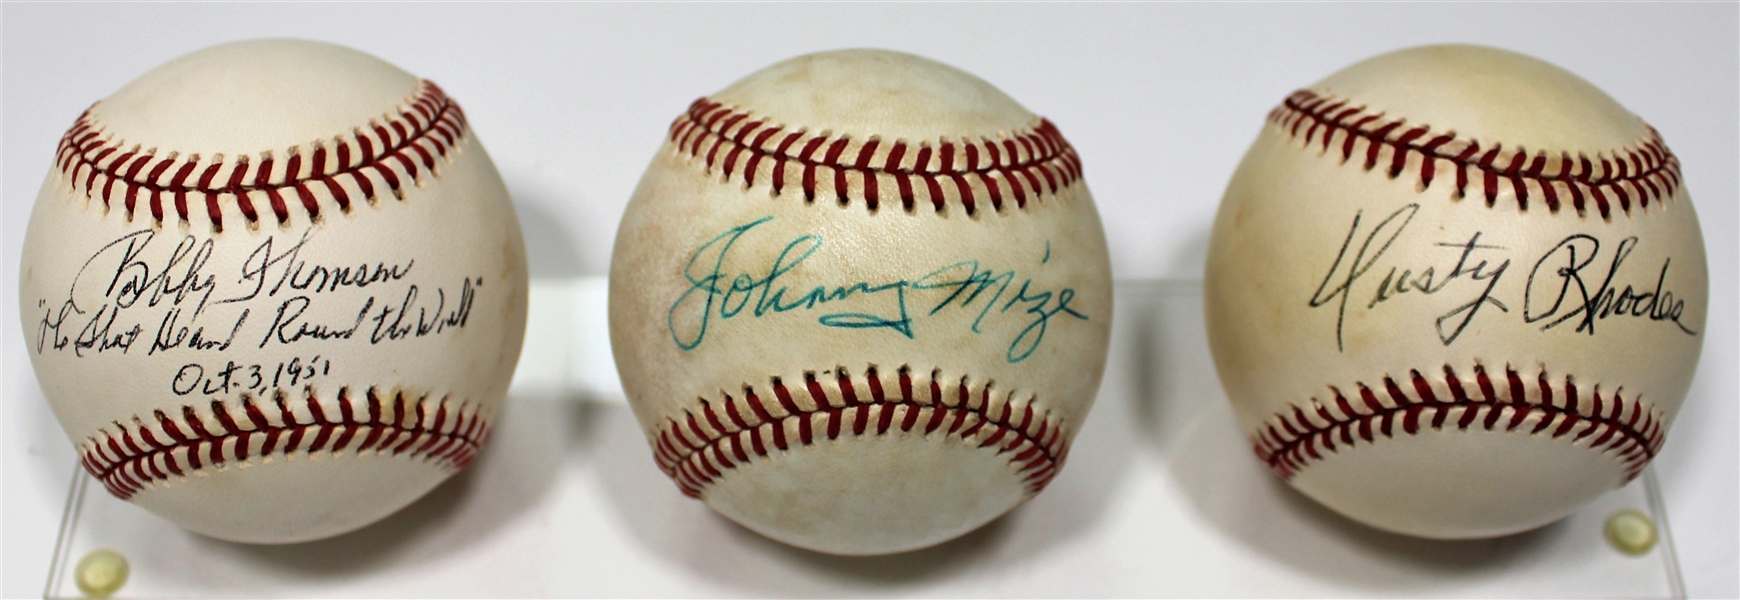 Johnny Mize - Dusty Rhodes - Bobby Thompson Signed Baseballs - JSA